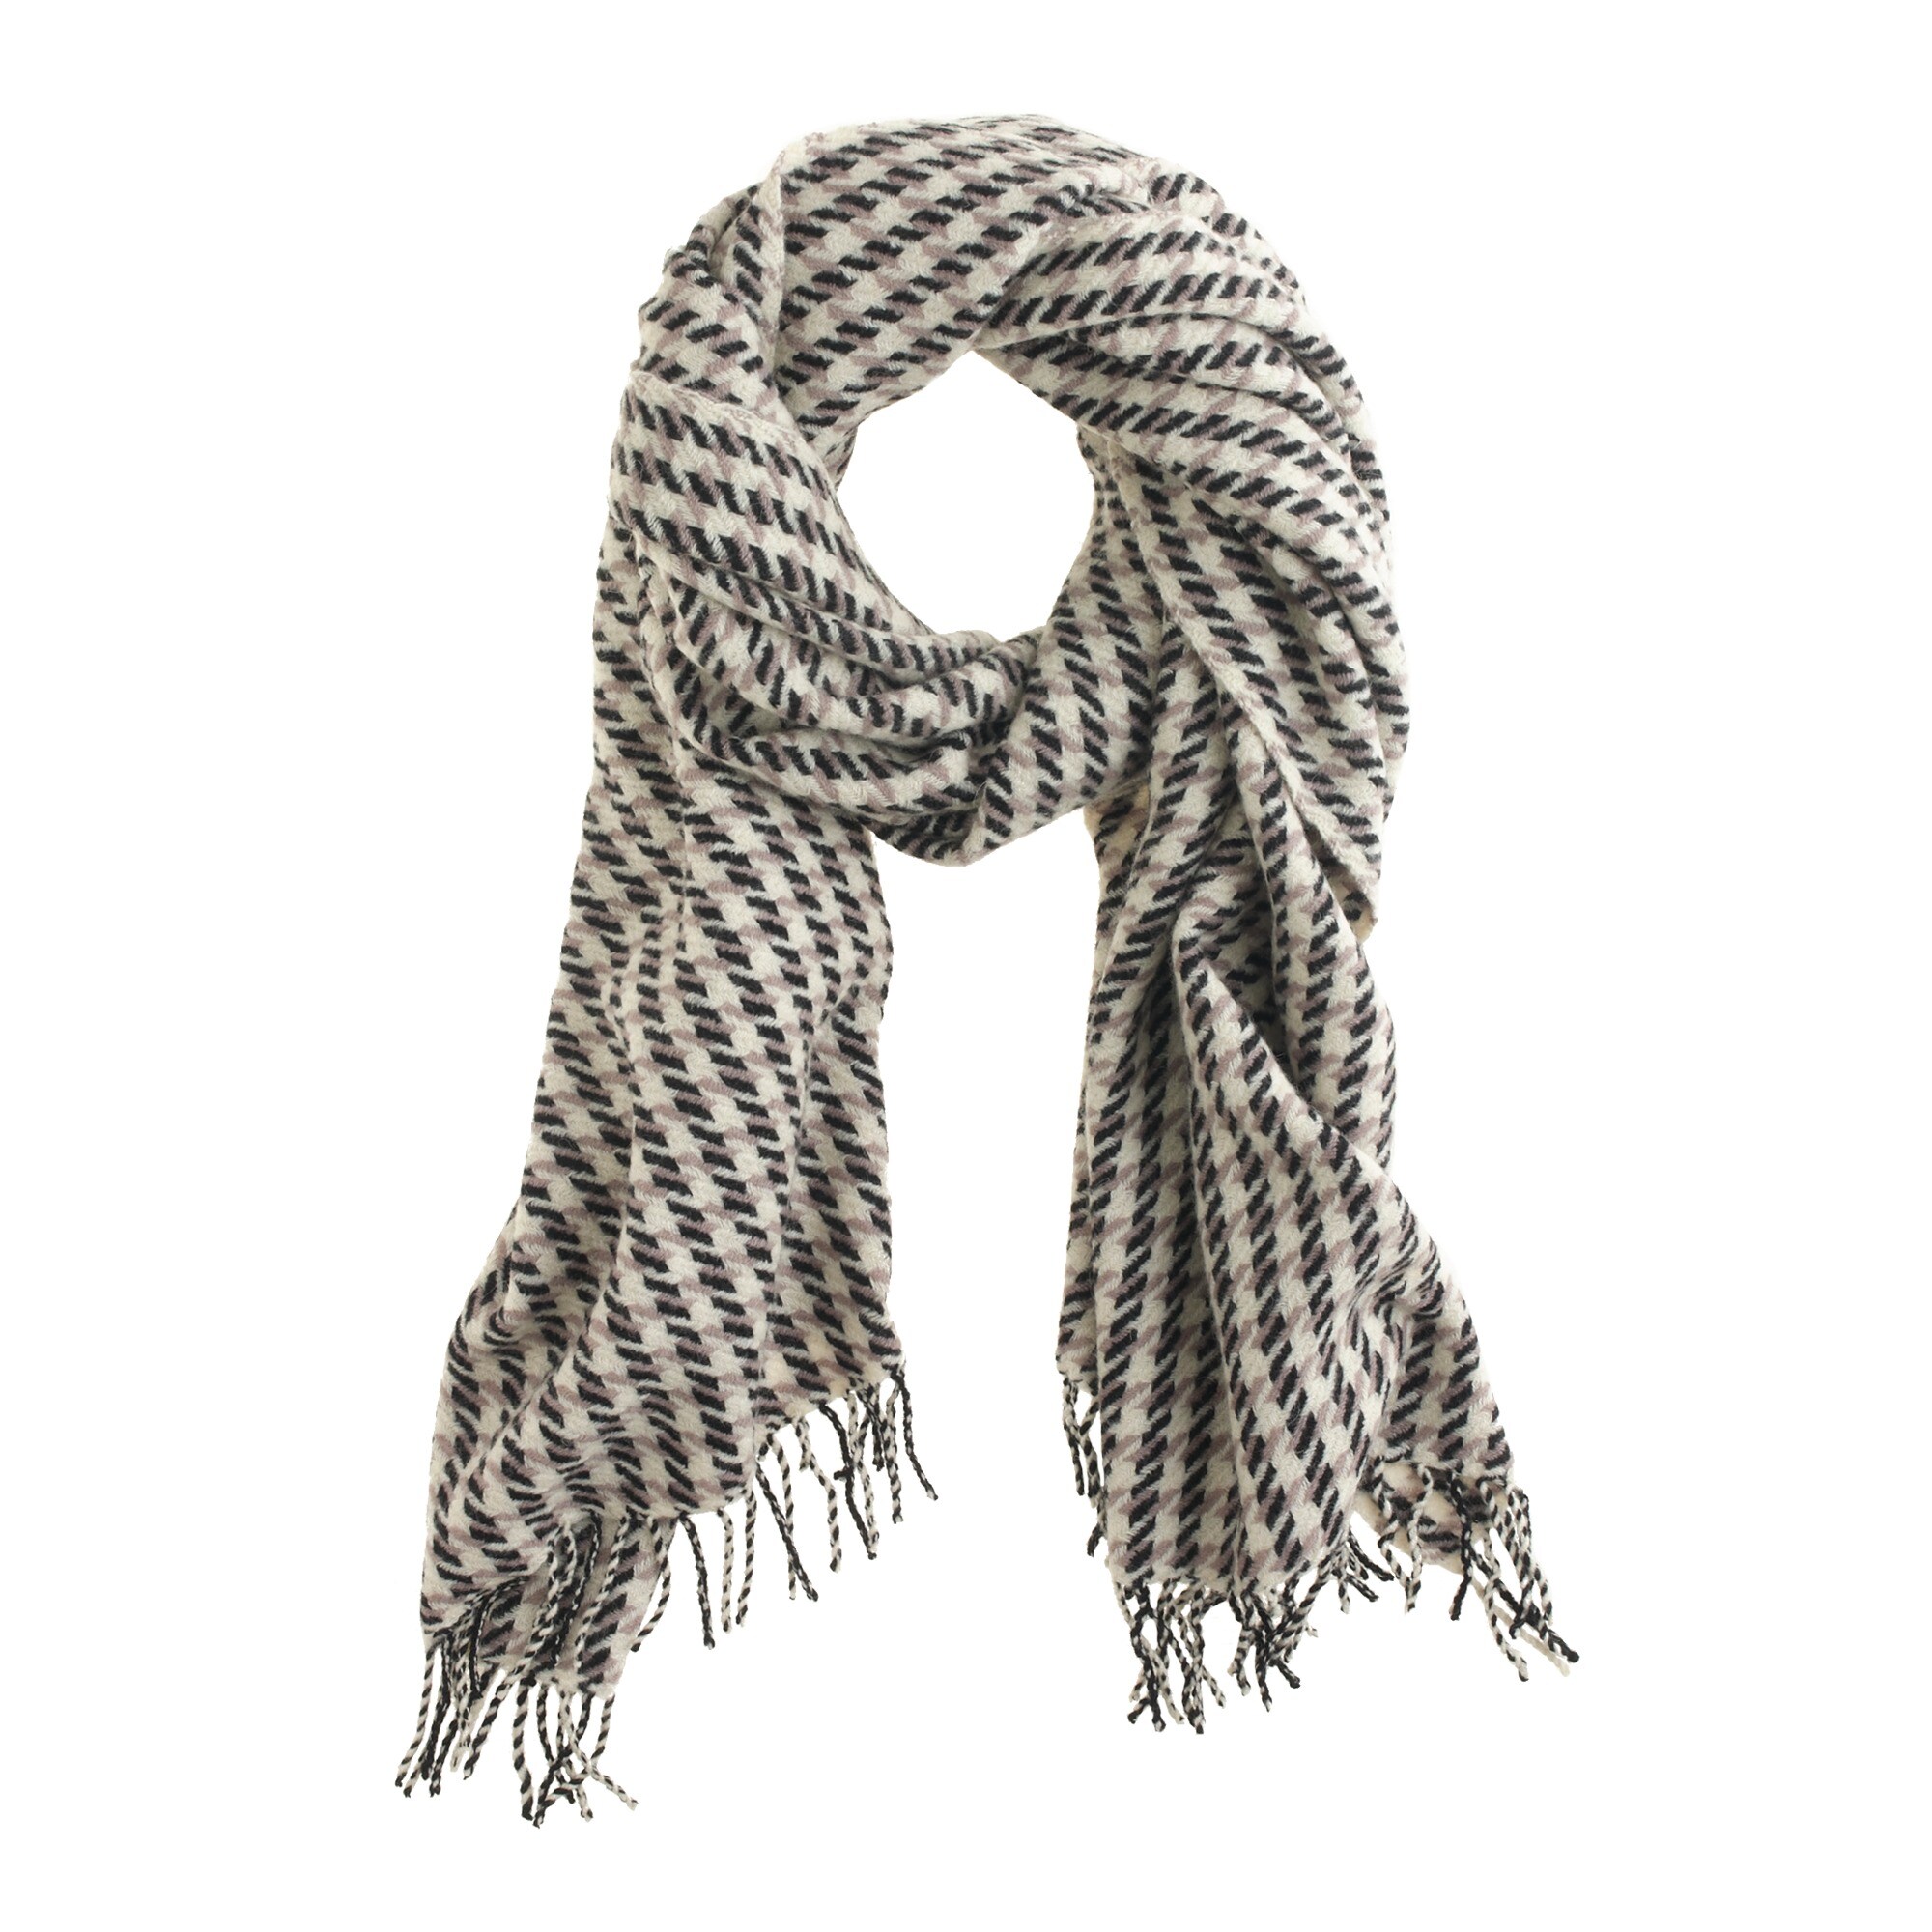 Wool houndstooth scarf : Women scarves & wraps | J.Crew